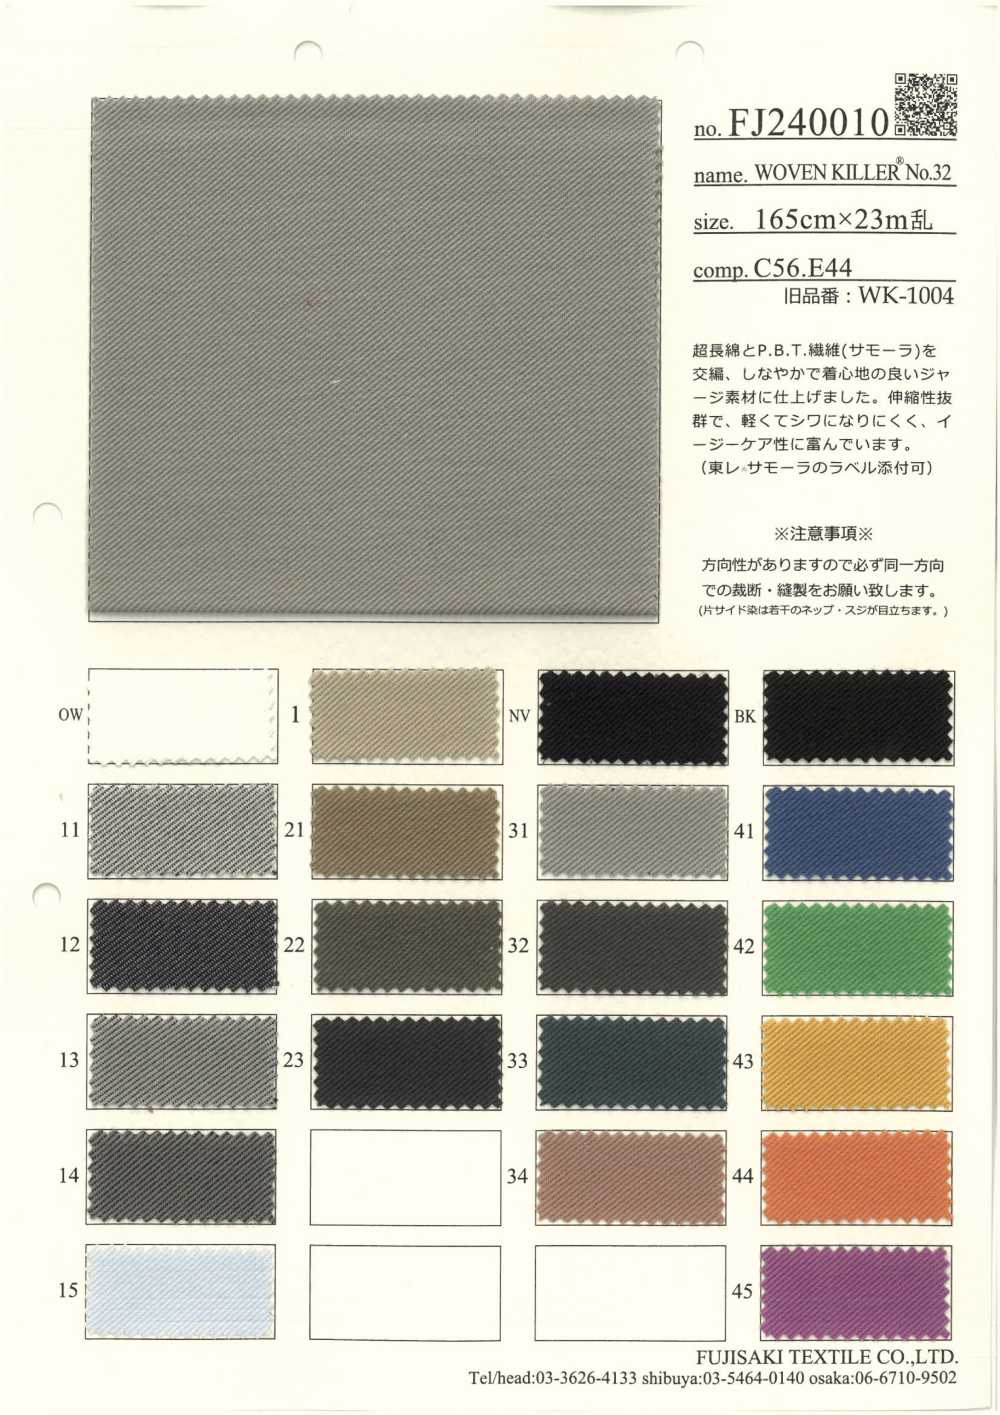 FJ240010 ASSASSINO DE WOVWEN[Têxtil / Tecido] Fujisaki Textile